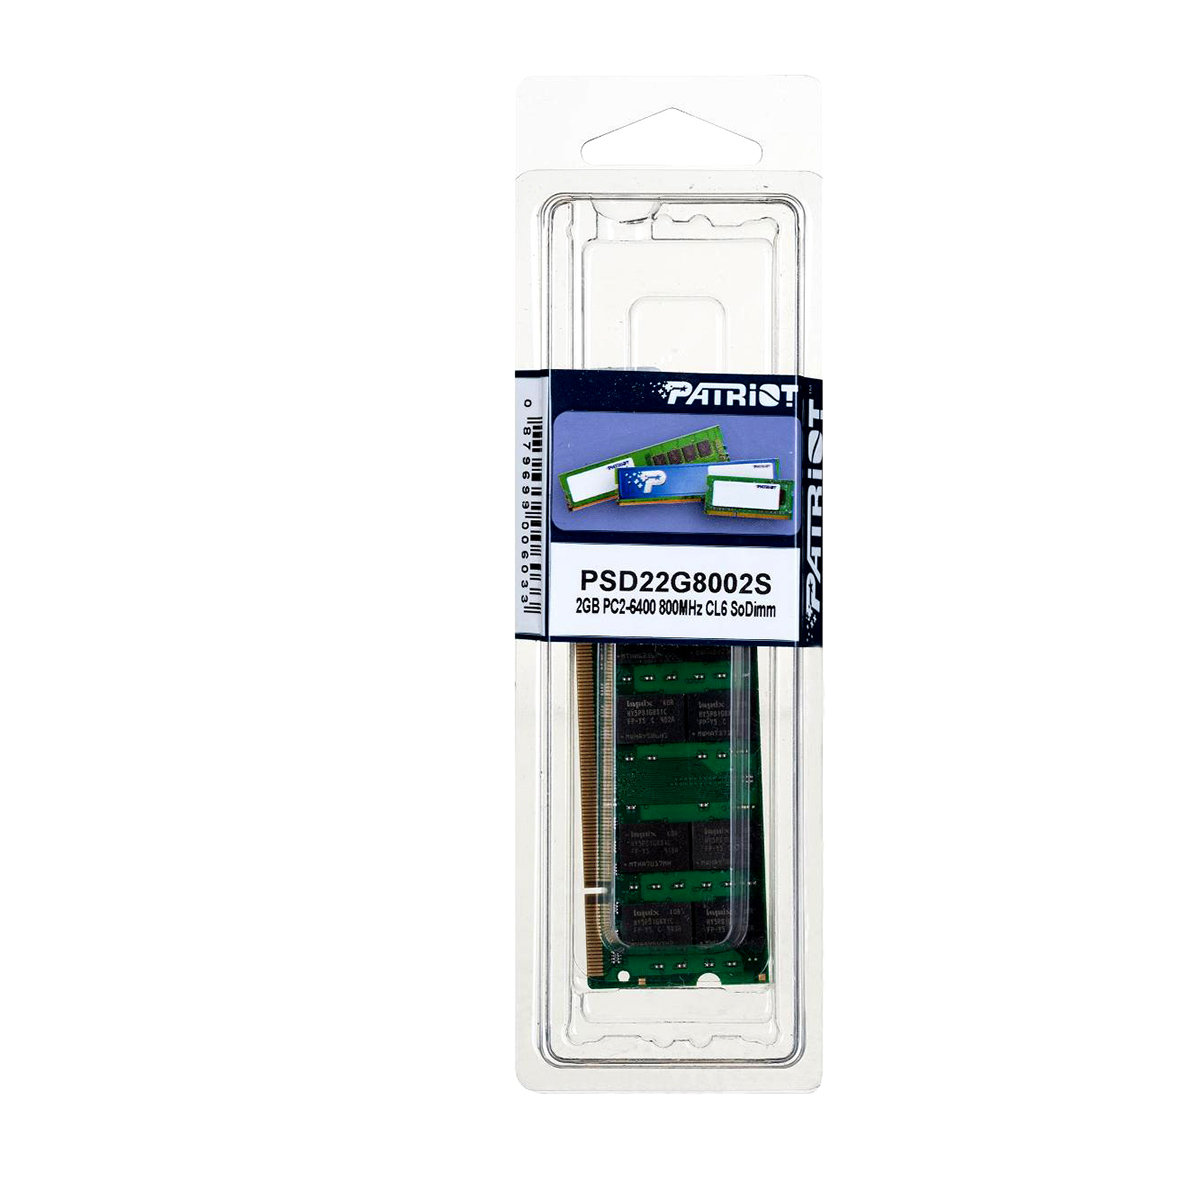 Patriot RAM SODIMM DDR2 800 2GB CL6 (PSD22G8002S)